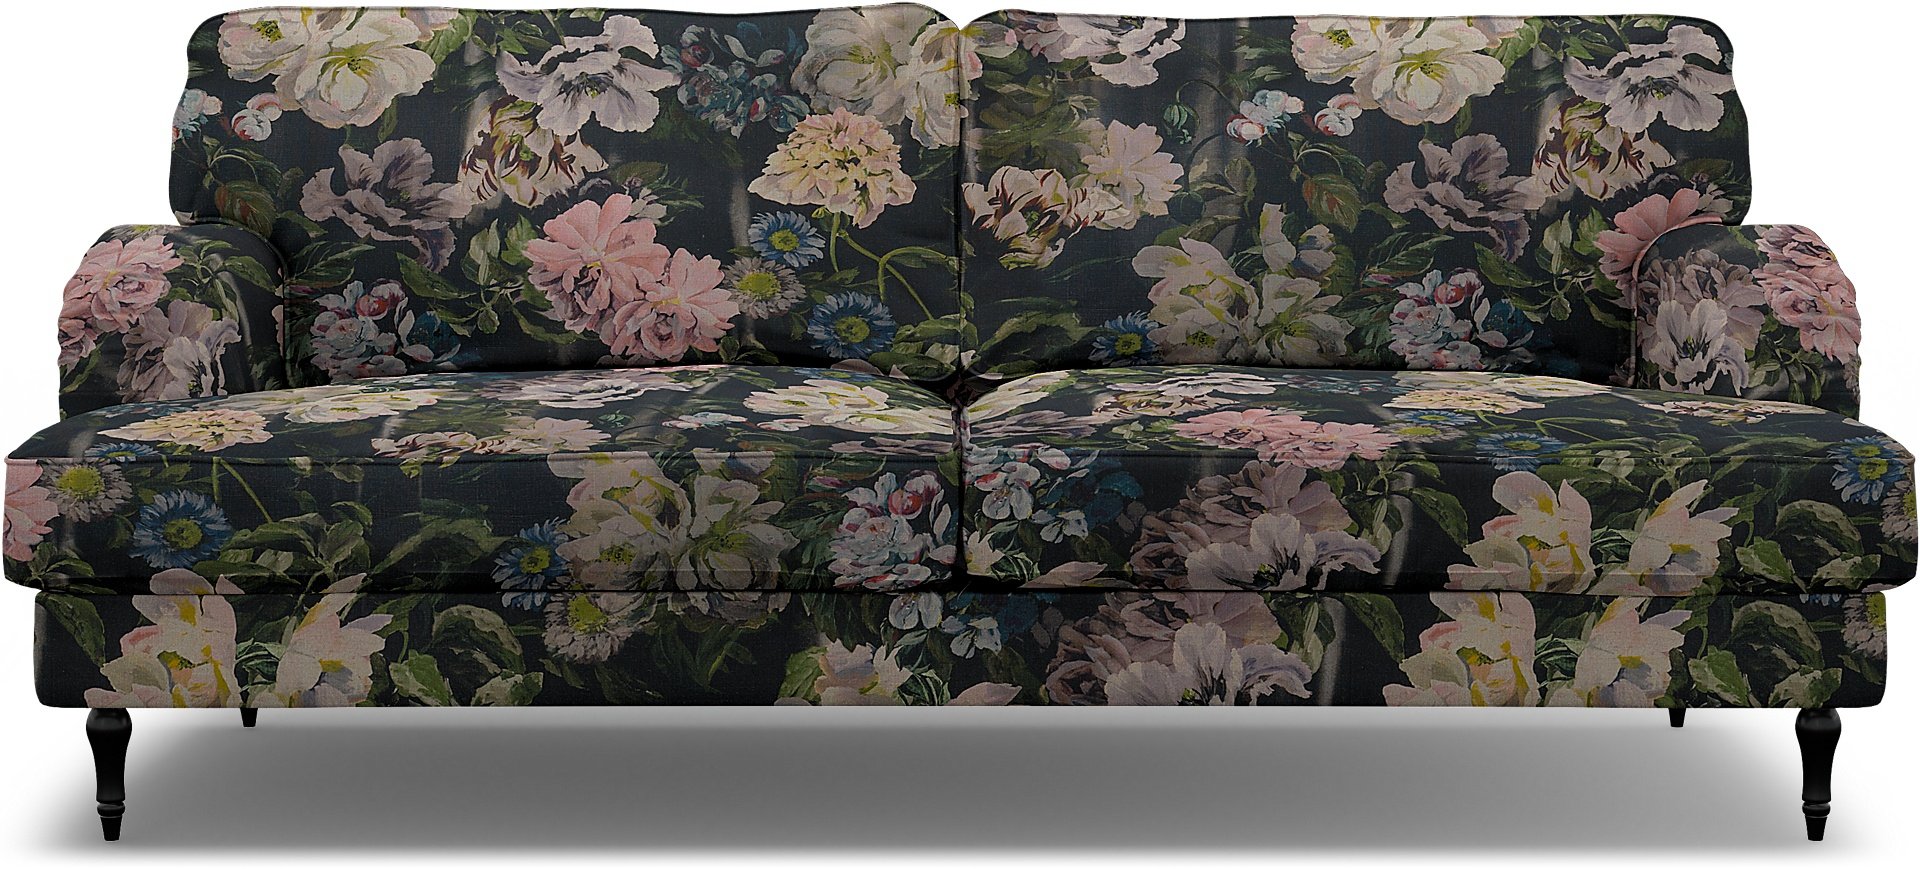 IKEA - Stocksund 3 Seater Sofa Cover, Delft Flower - Graphite, Linen - Bemz